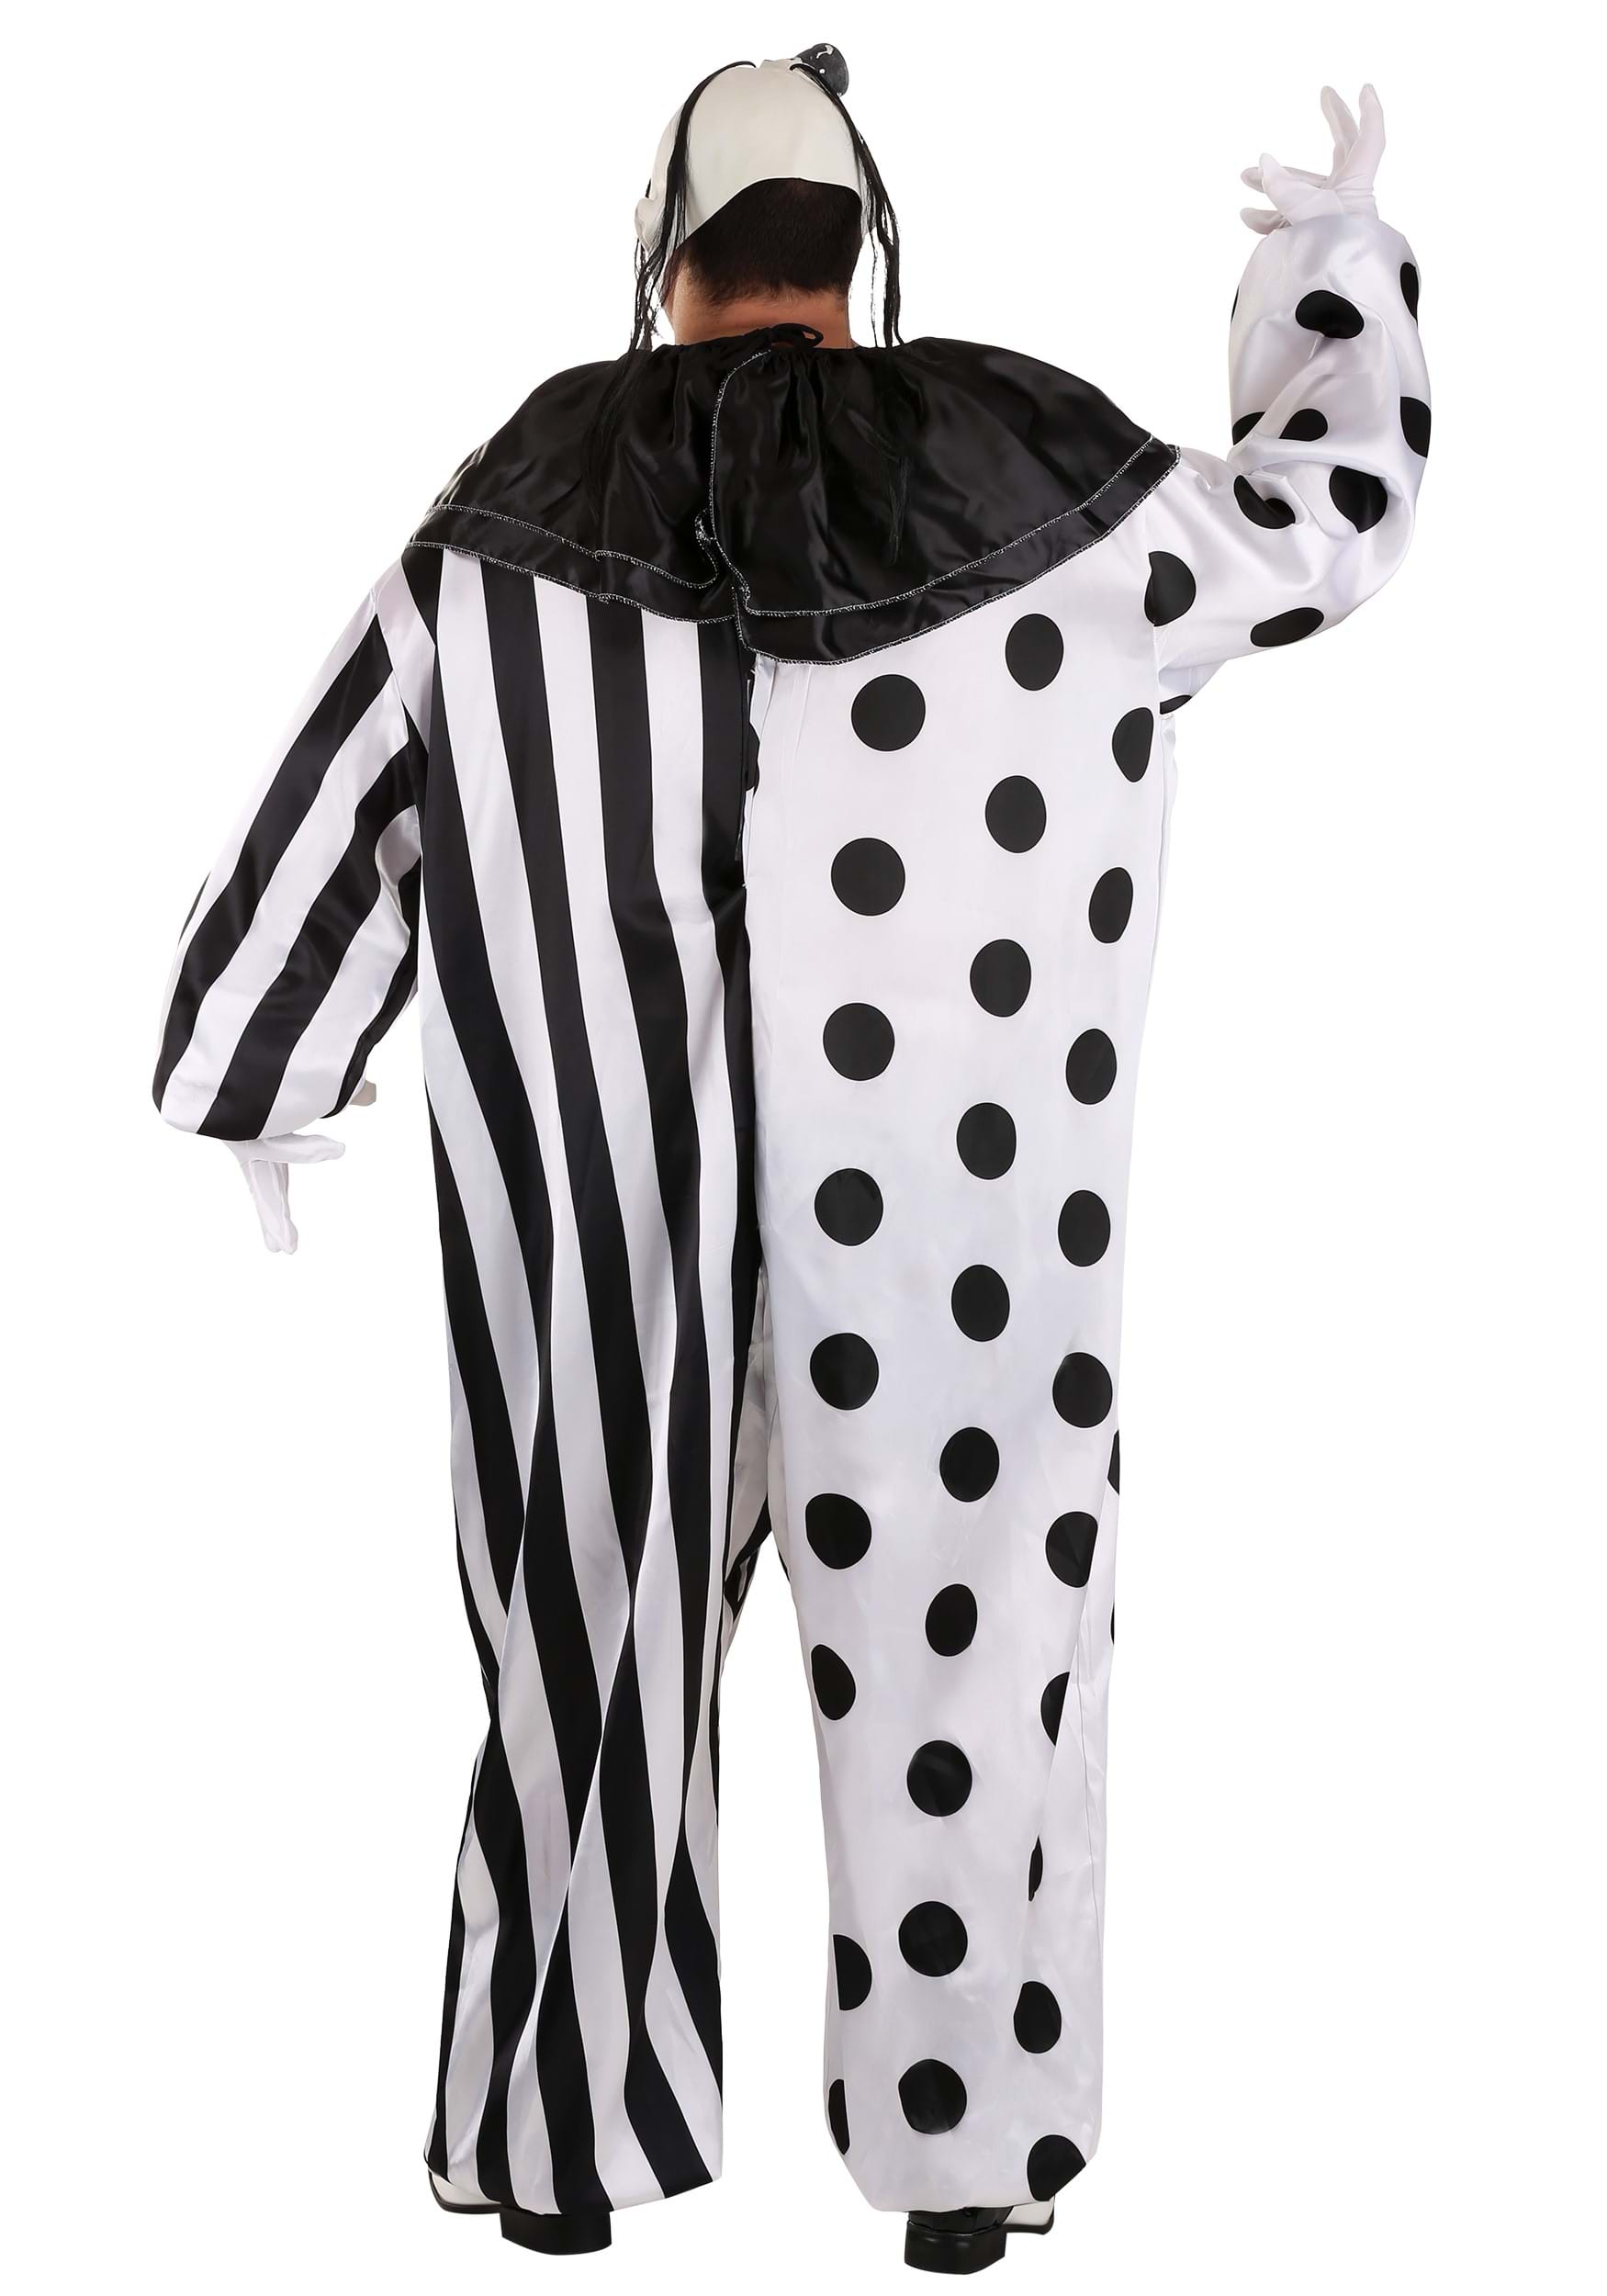 Killer Clown Plus Size Fancy Dress Costume For Men